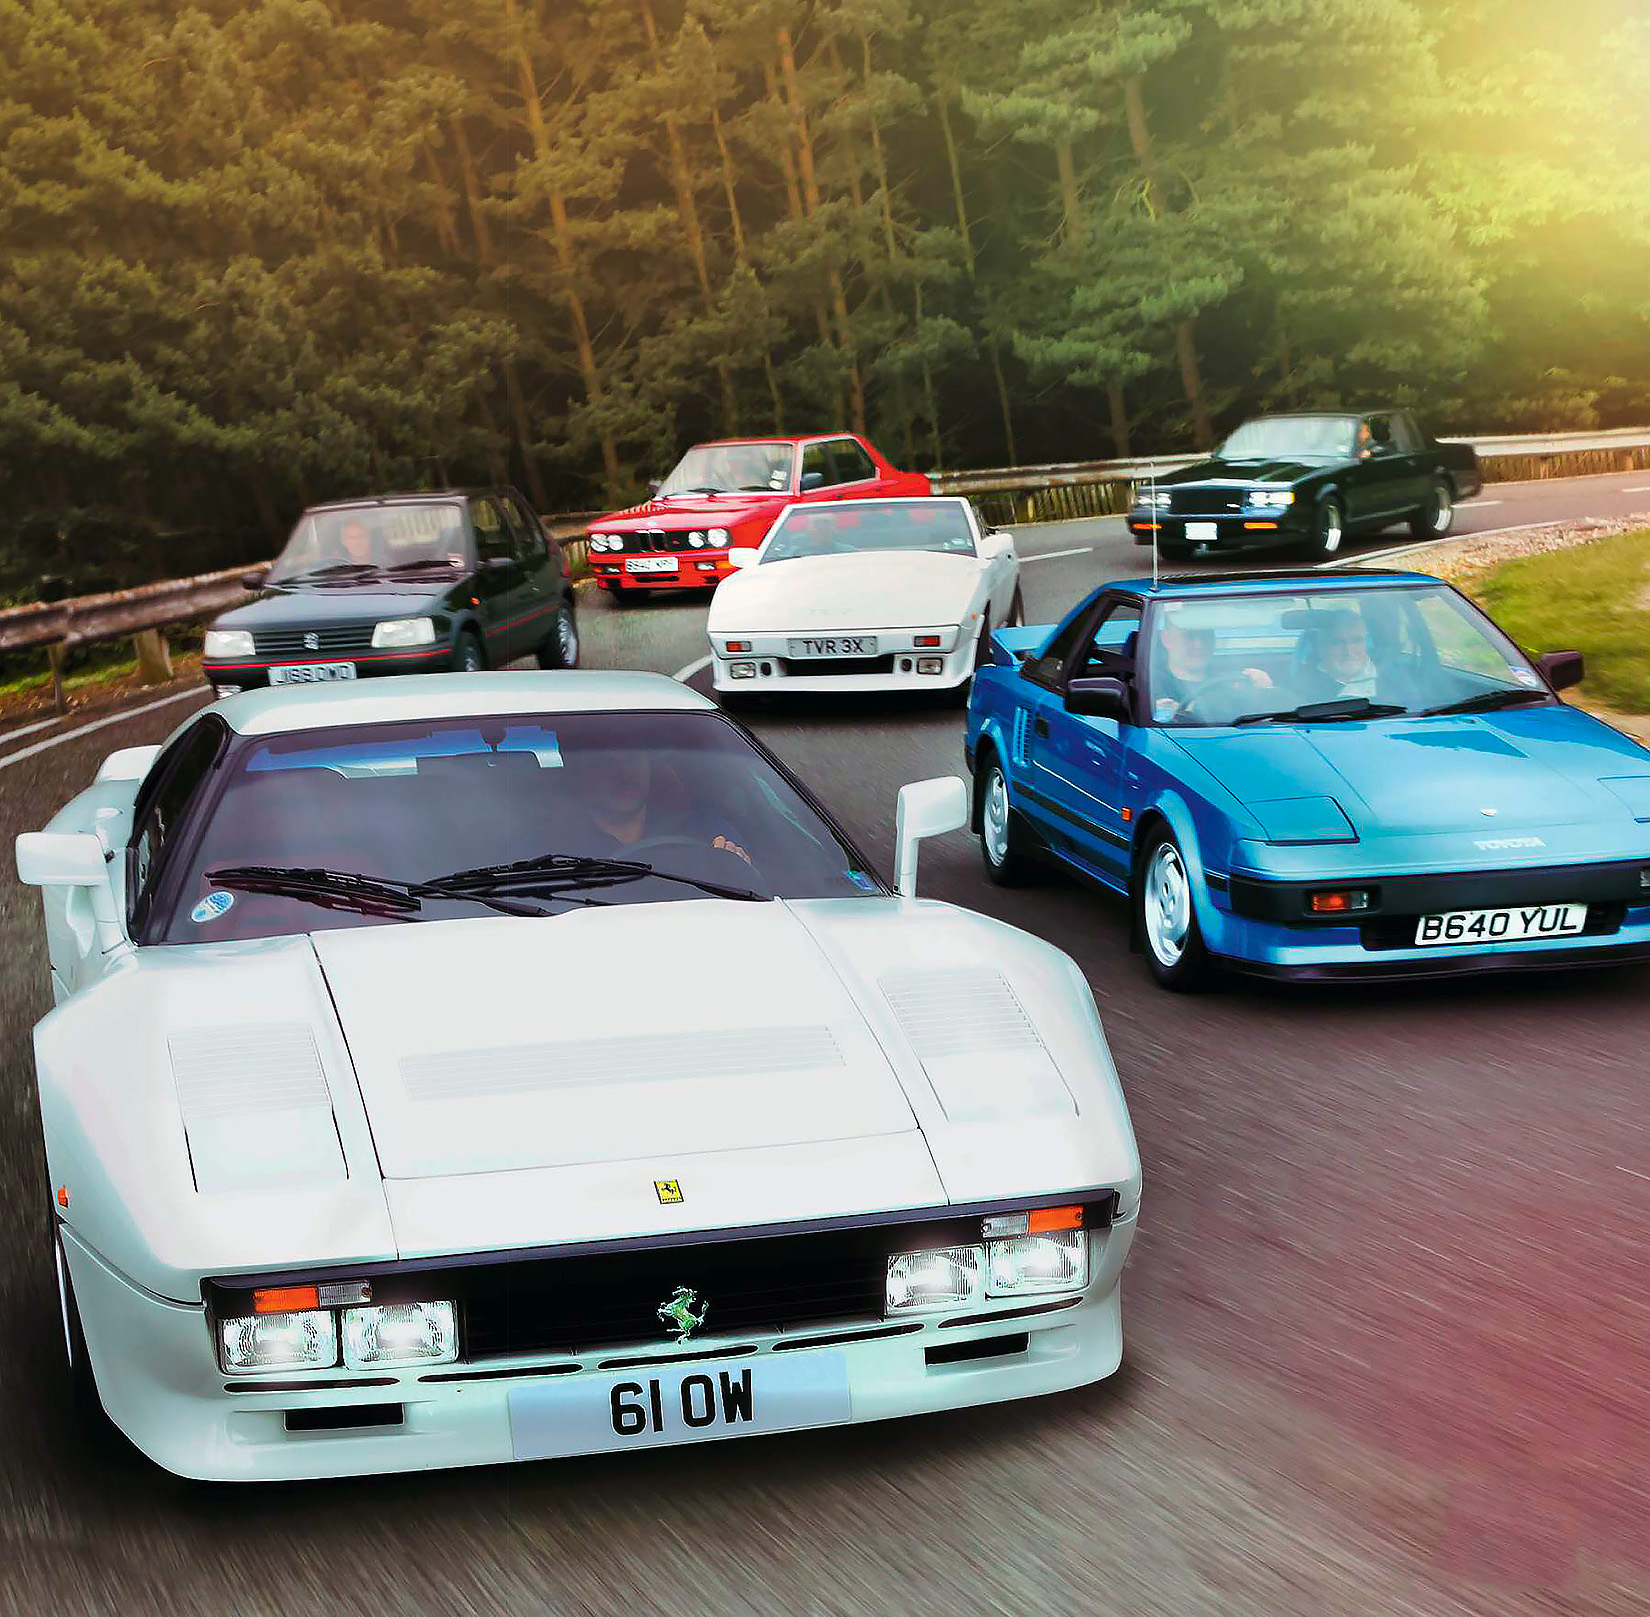 Giant Test - Ferrari 288 GTO, Toyota MR2, Peugeot 205 GTi, TVR 390SE, BMW M535i E28 and Buick Grand National Turbo